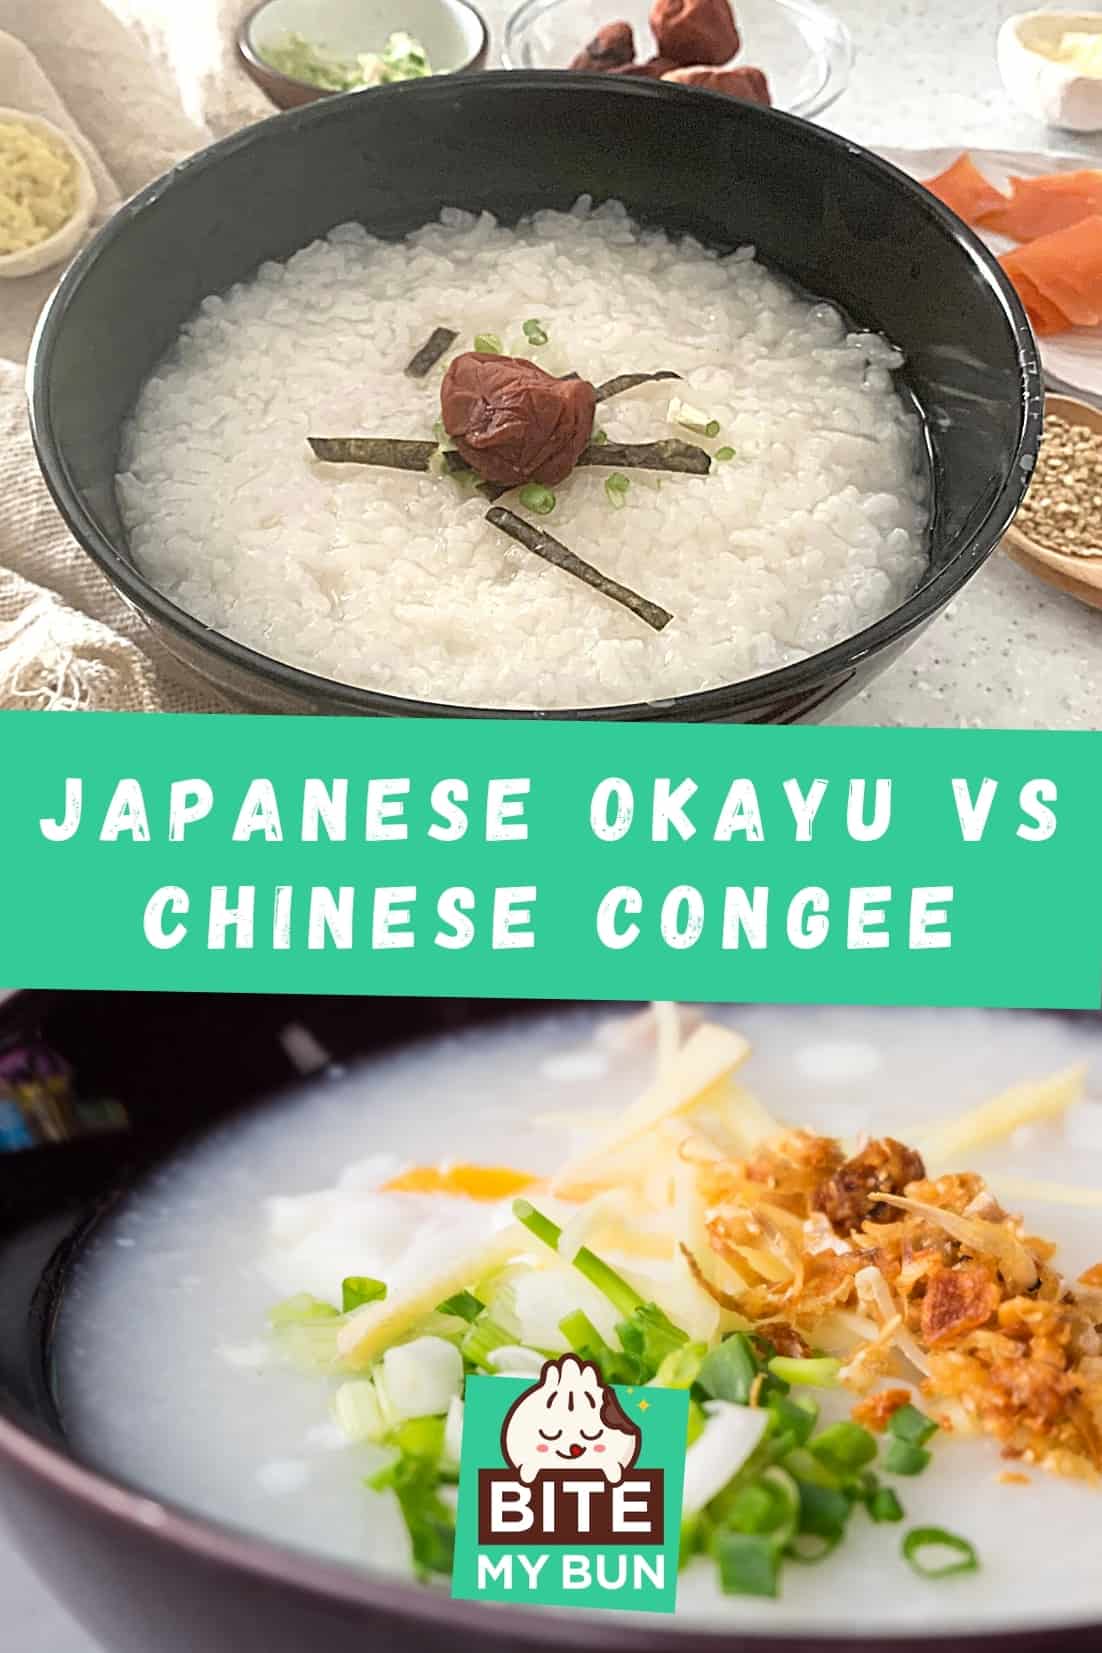 Japane okayu vs Chinese congee